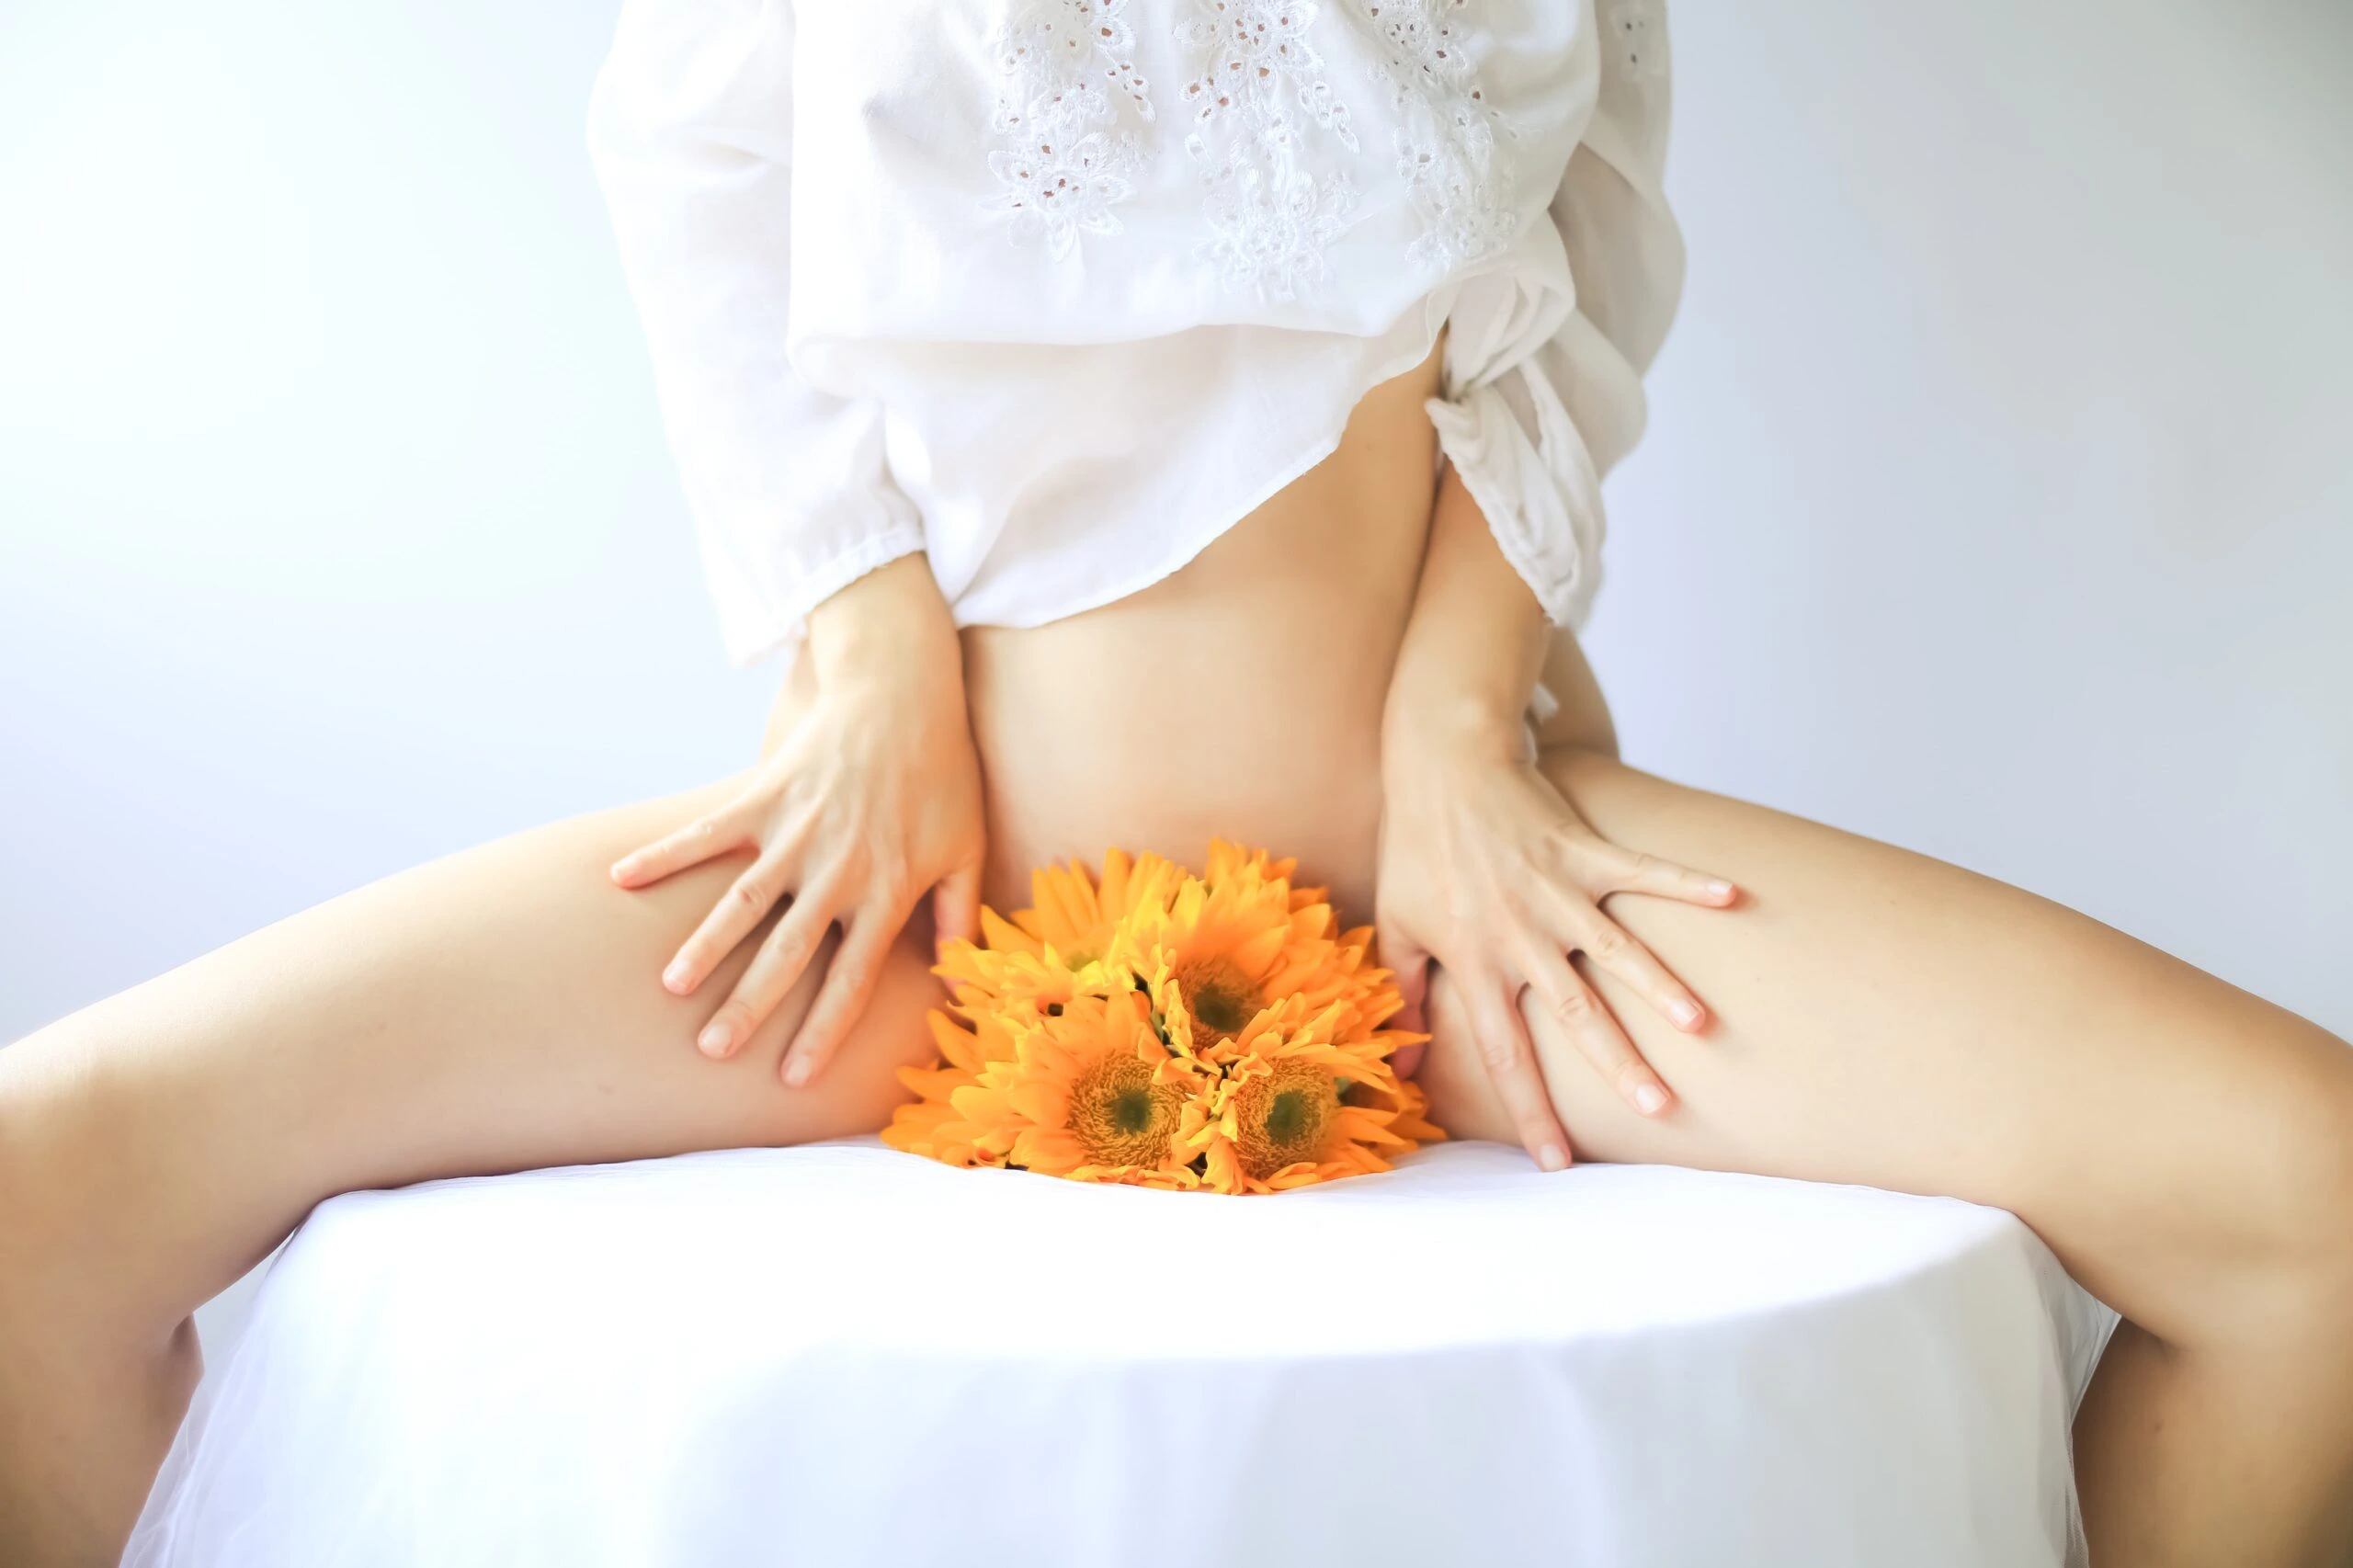 ava-sol-Woman with orange daisy blossoms held between legs -unsplash